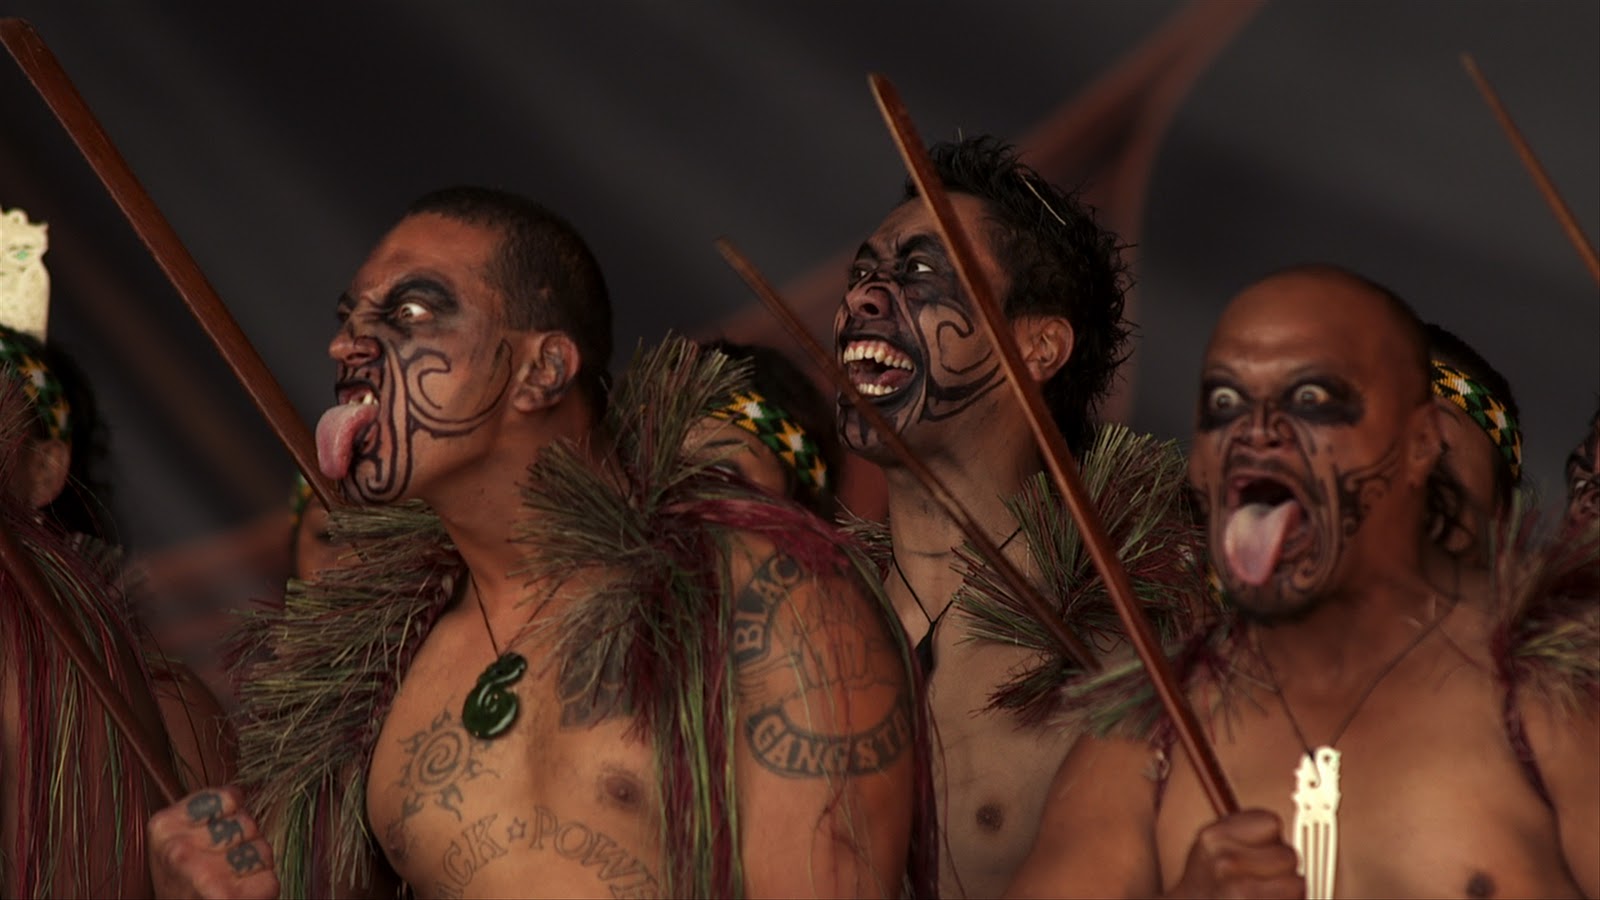 People 1600x900 men tongues tongue out shirtless Maori Haka